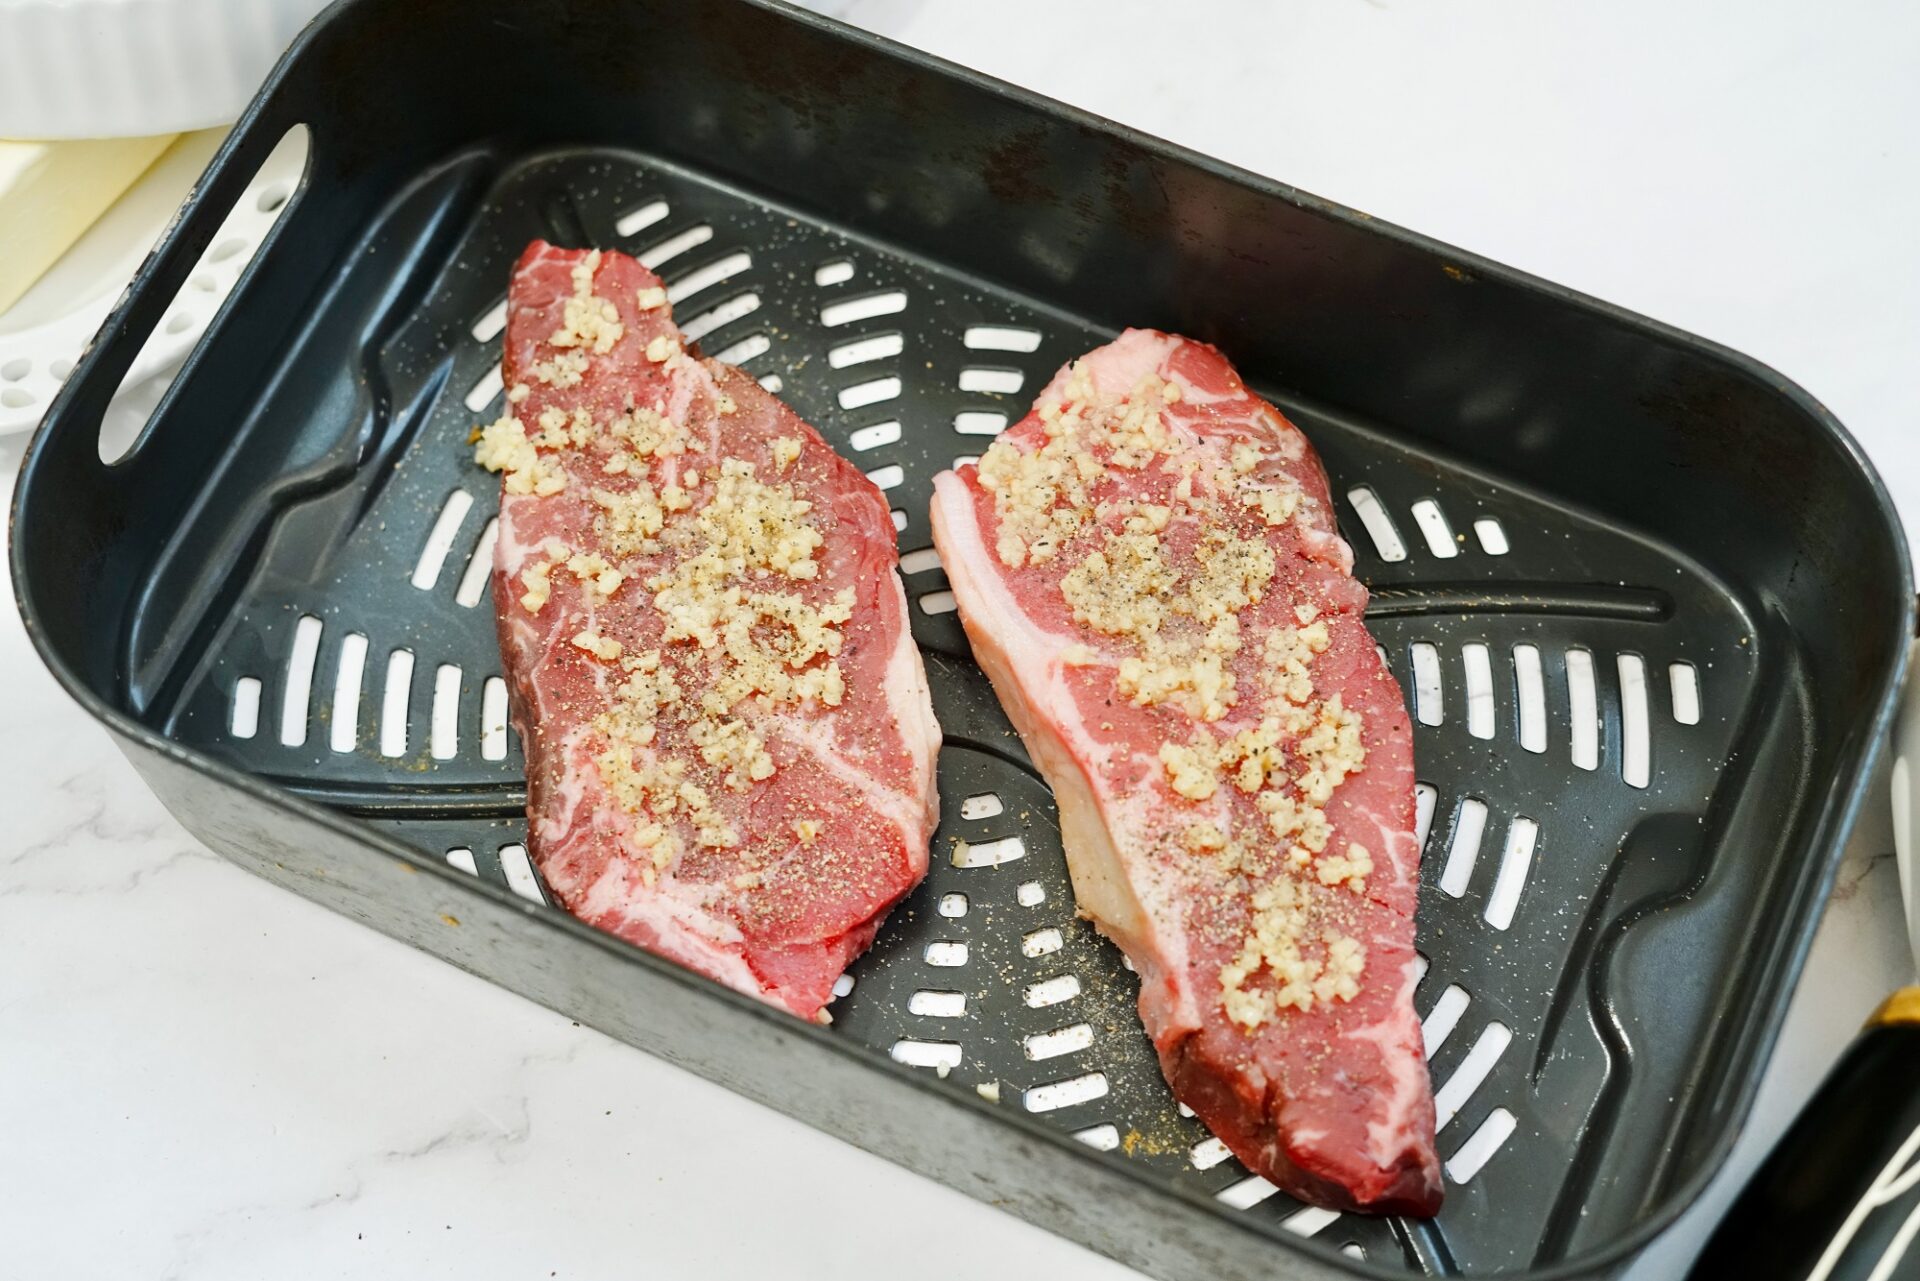 Two uncooked prepared steaks in the air fryer basket.